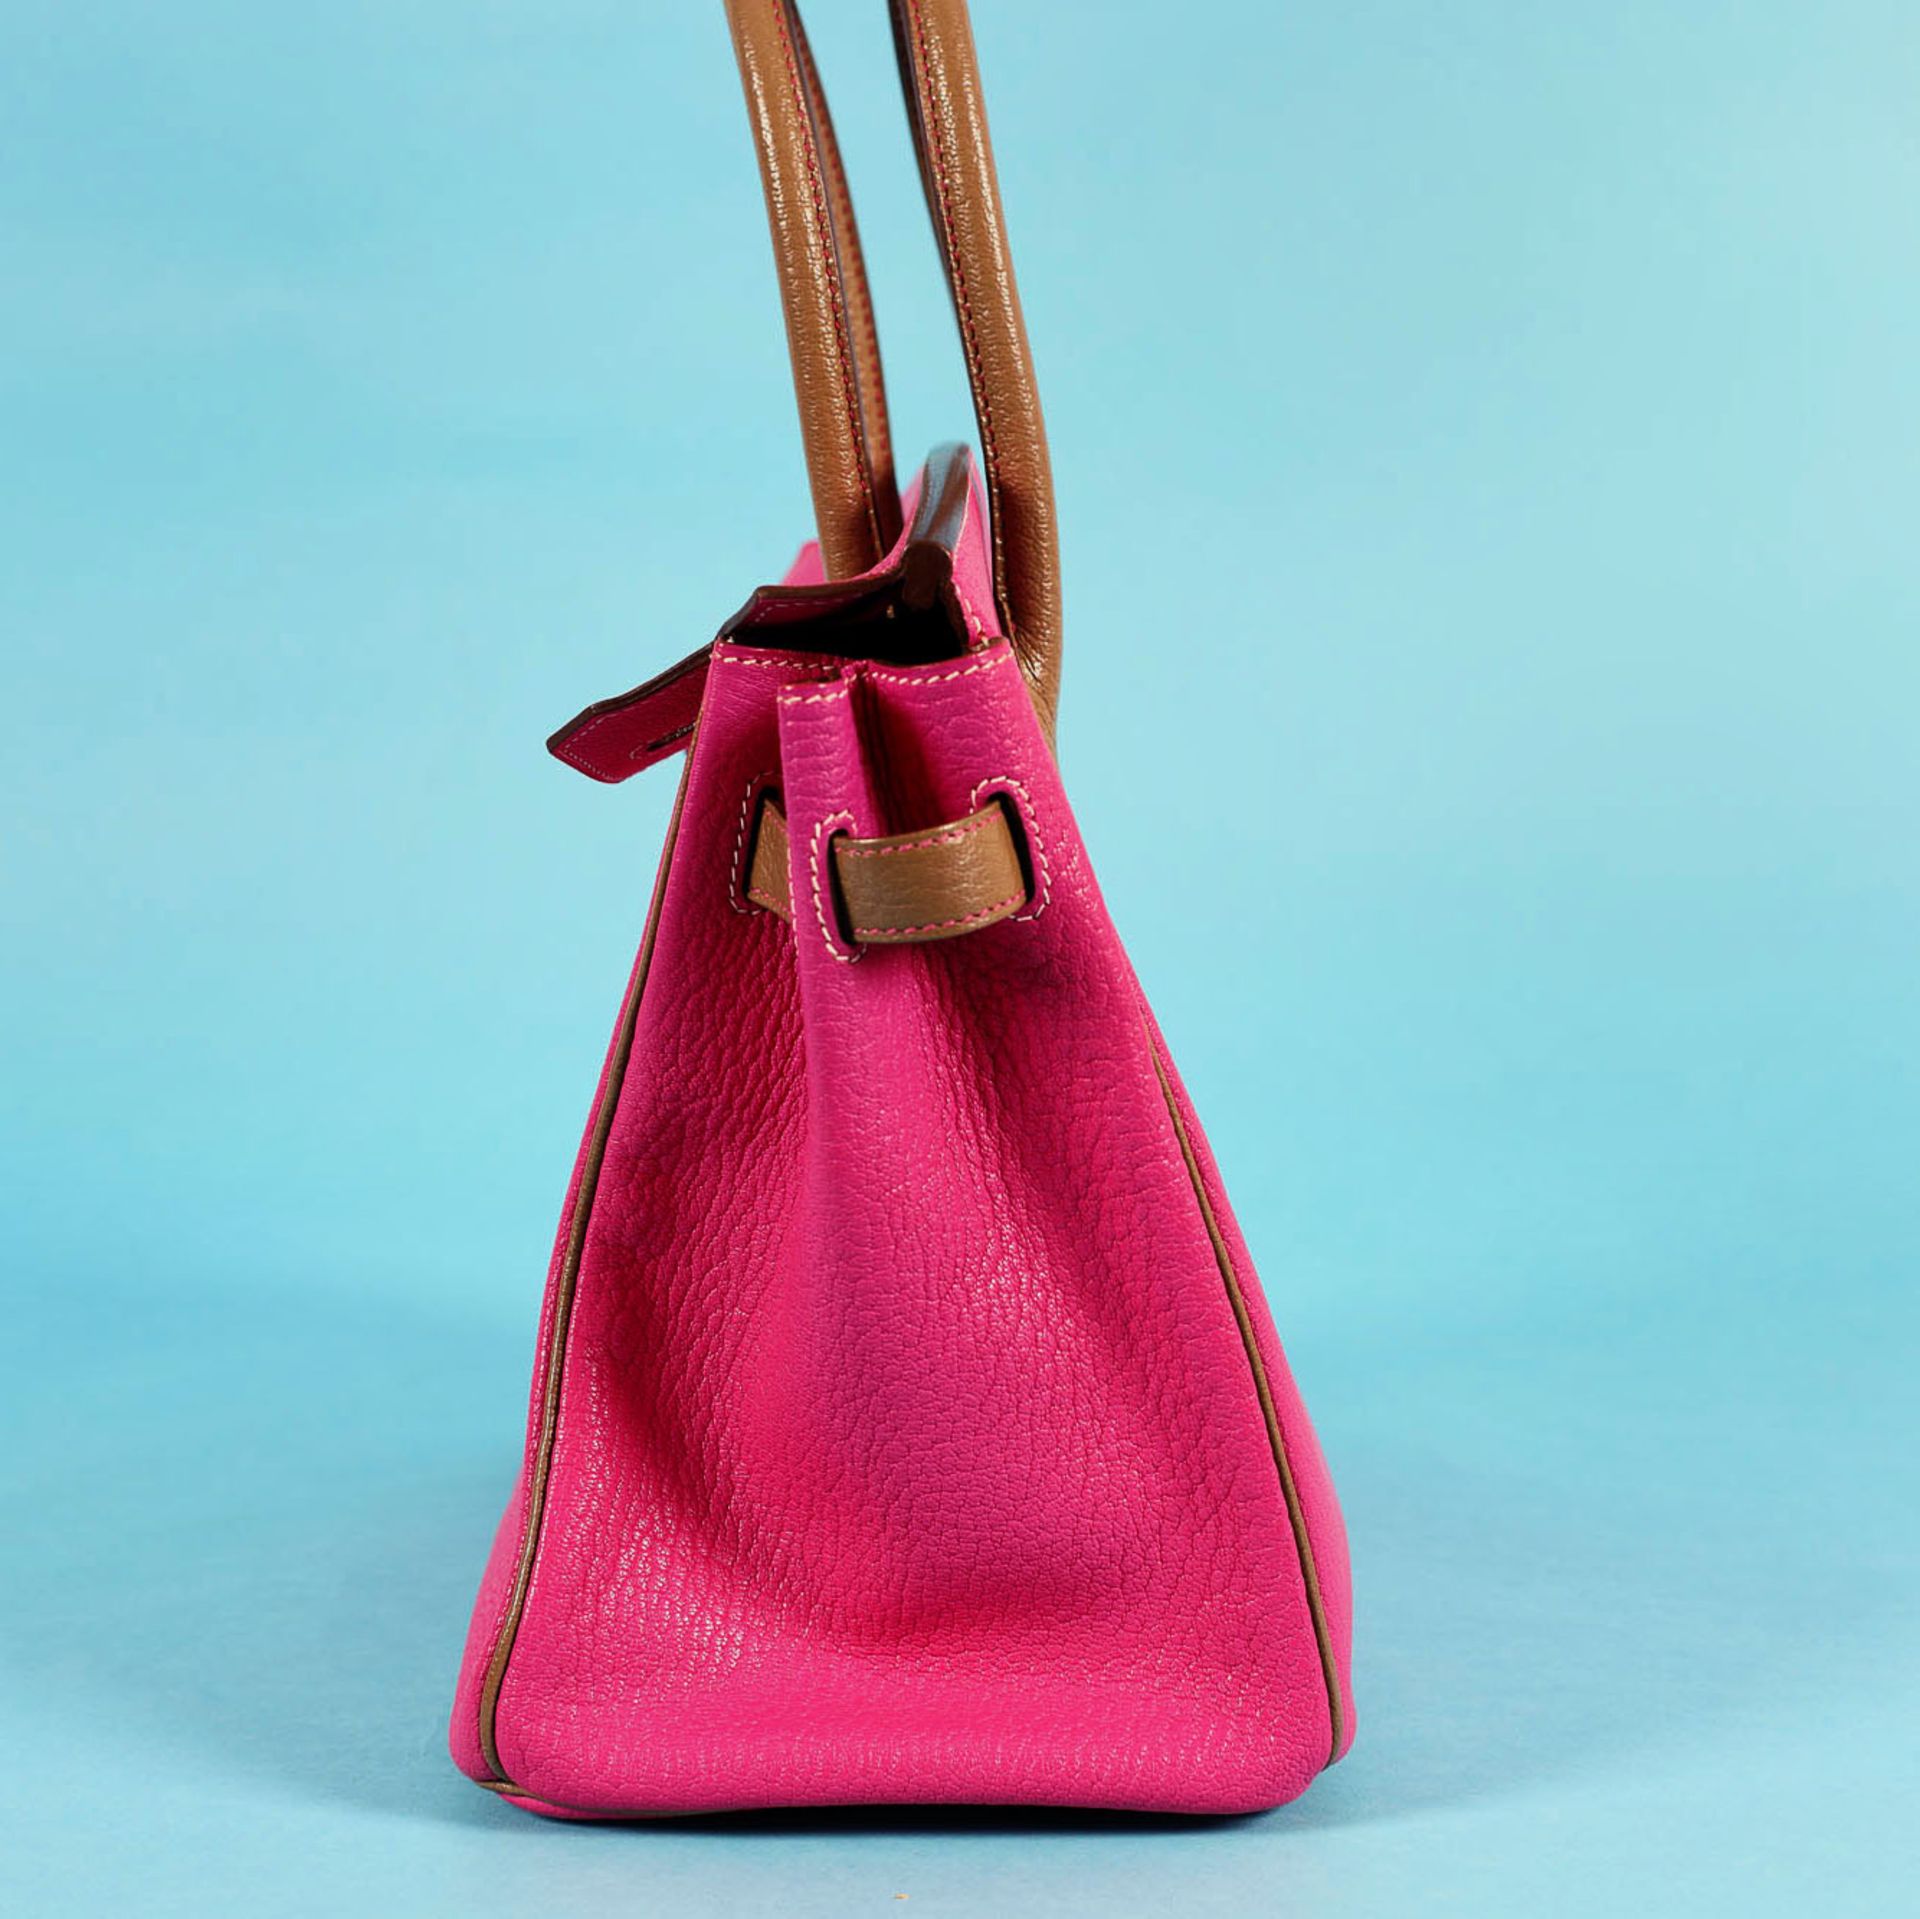 "Birkin 30" - Hermès special order bag, Chèvre leather, colour Rose Pourpre, for women, limited ed - Image 2 of 6